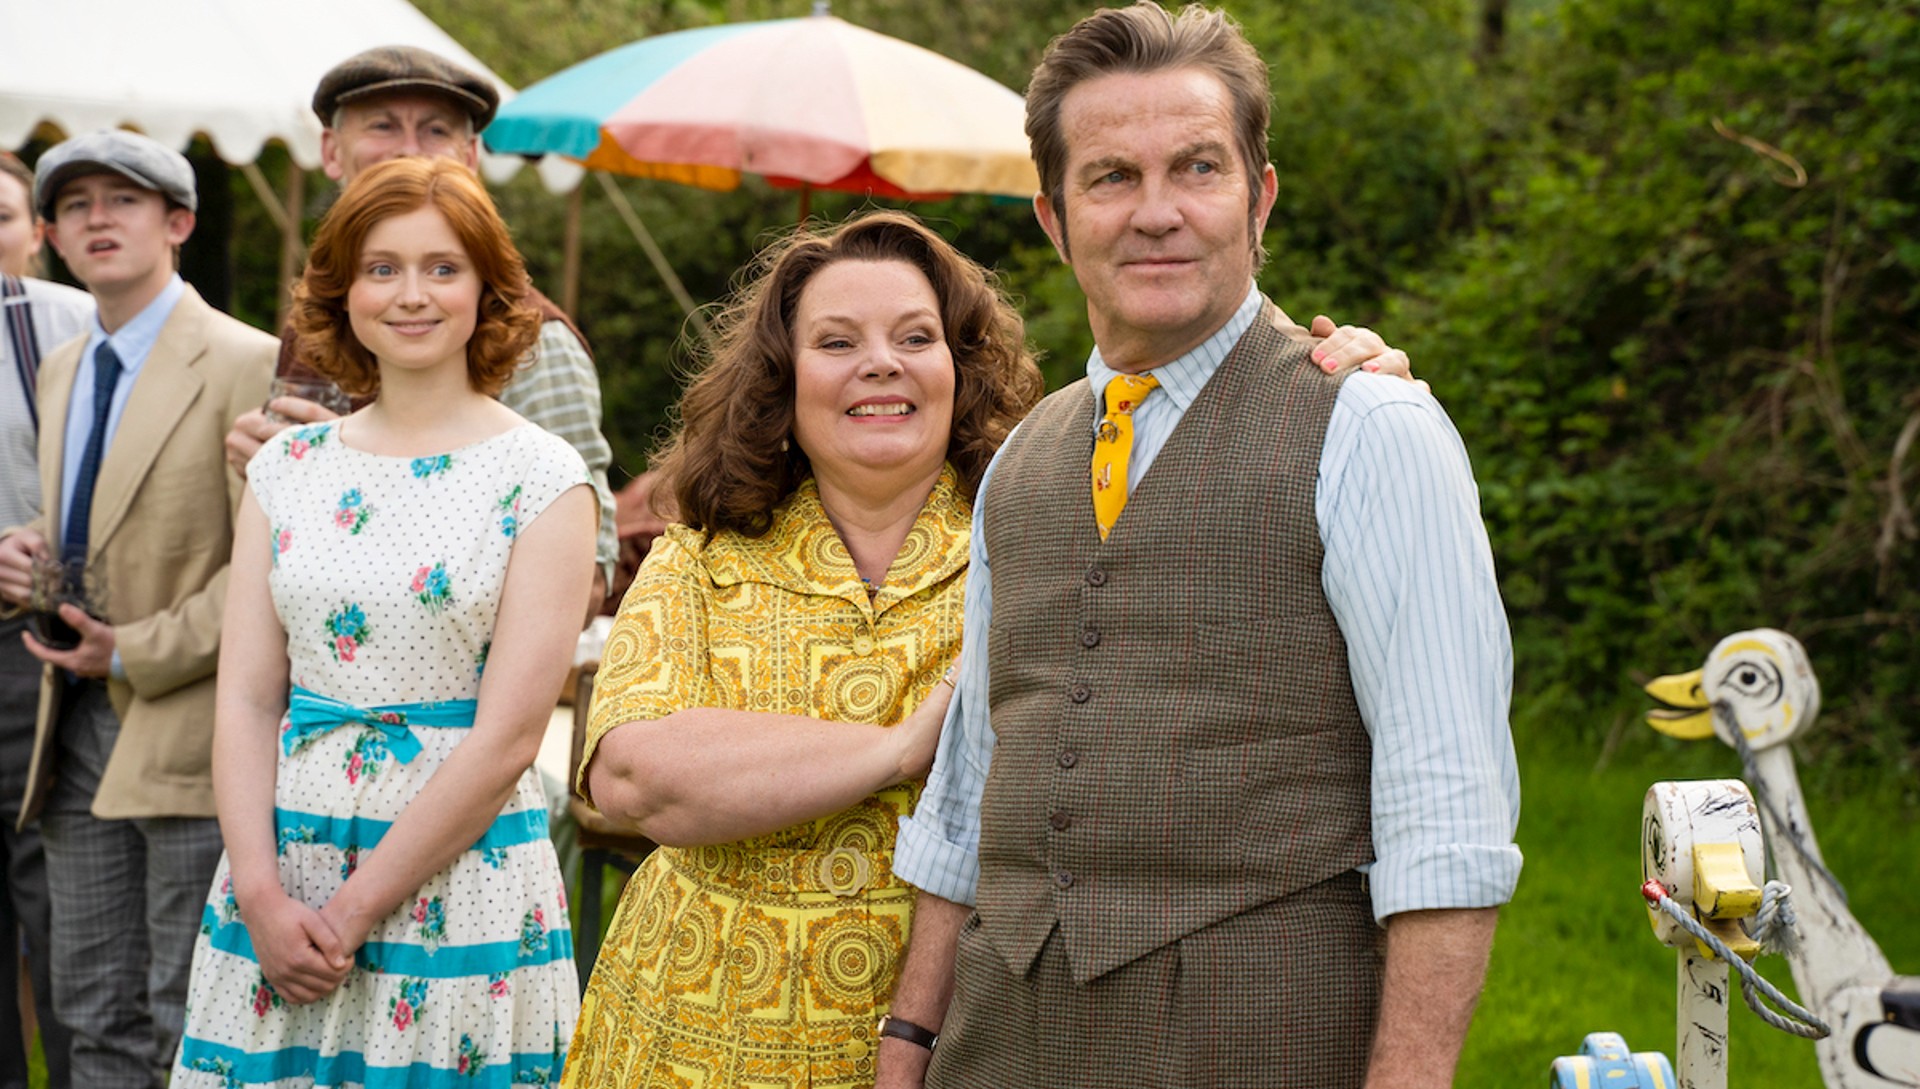 WATCH: Bradley Walsh and Joanna Scanlan Return in 'The Larkins' trailer